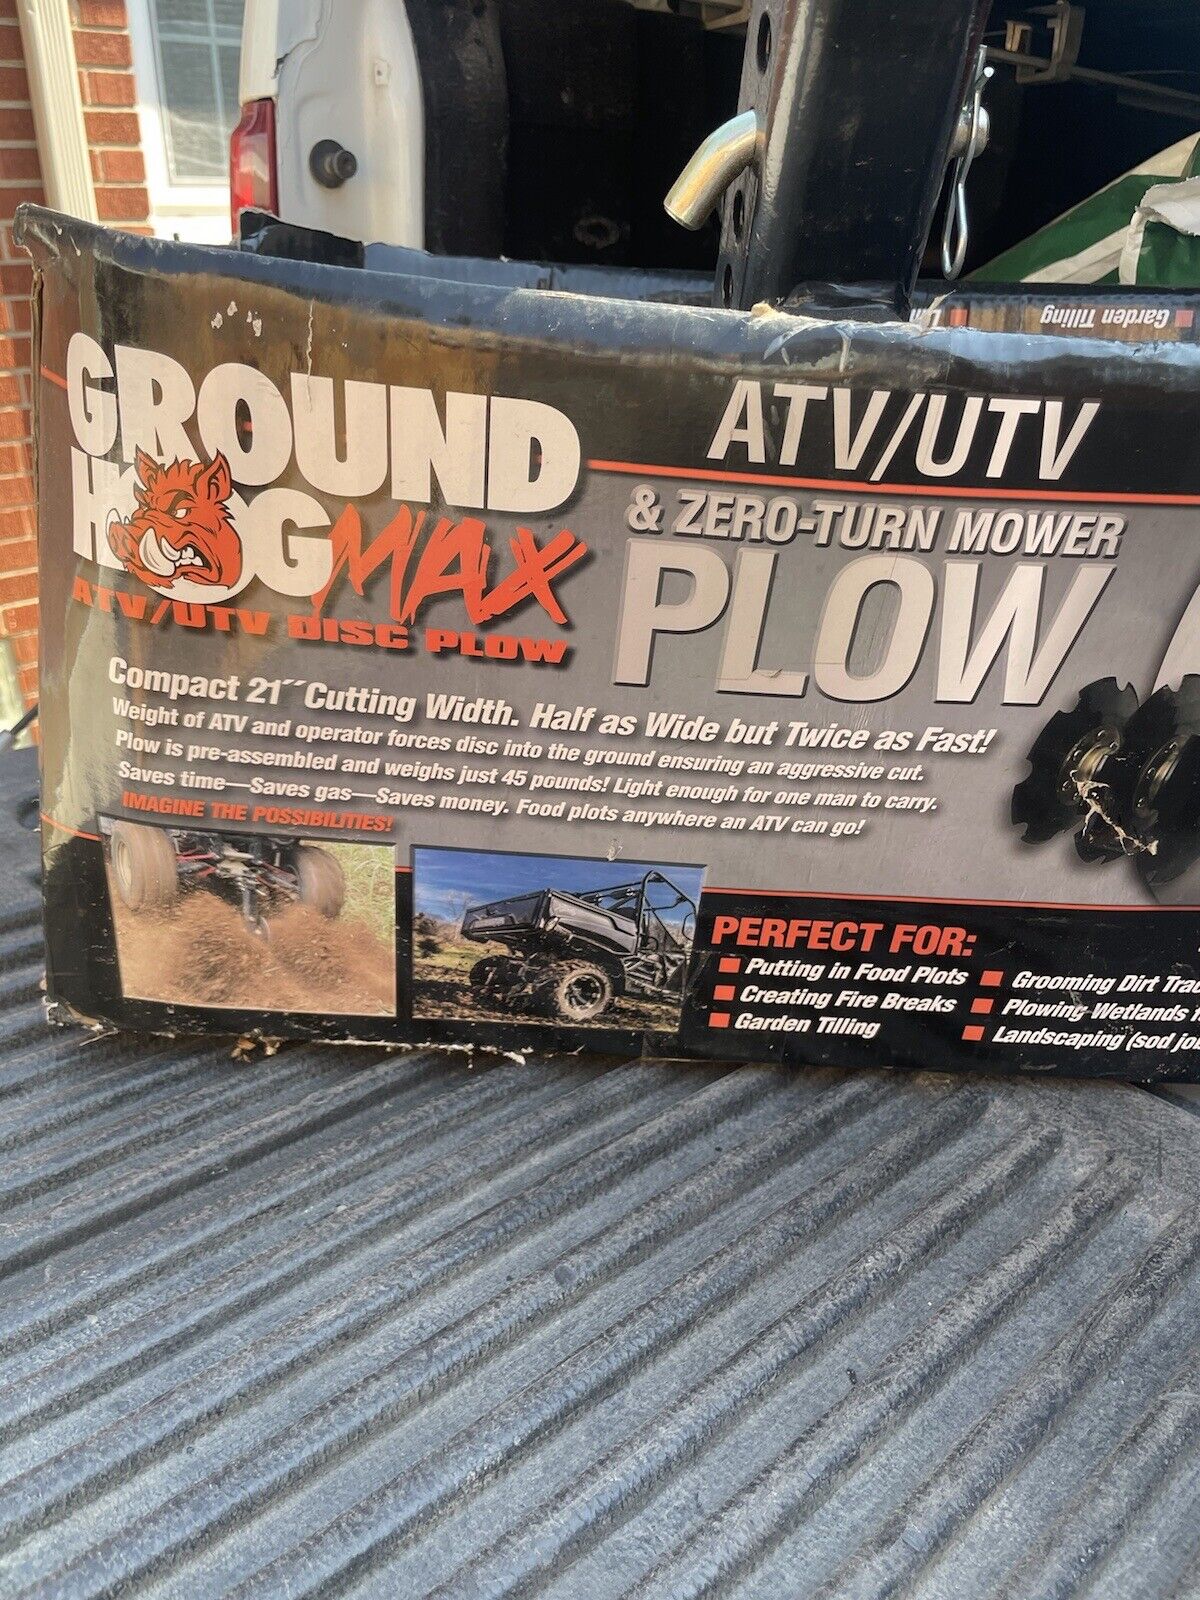 Ground Hog Max Atv/utv Plow